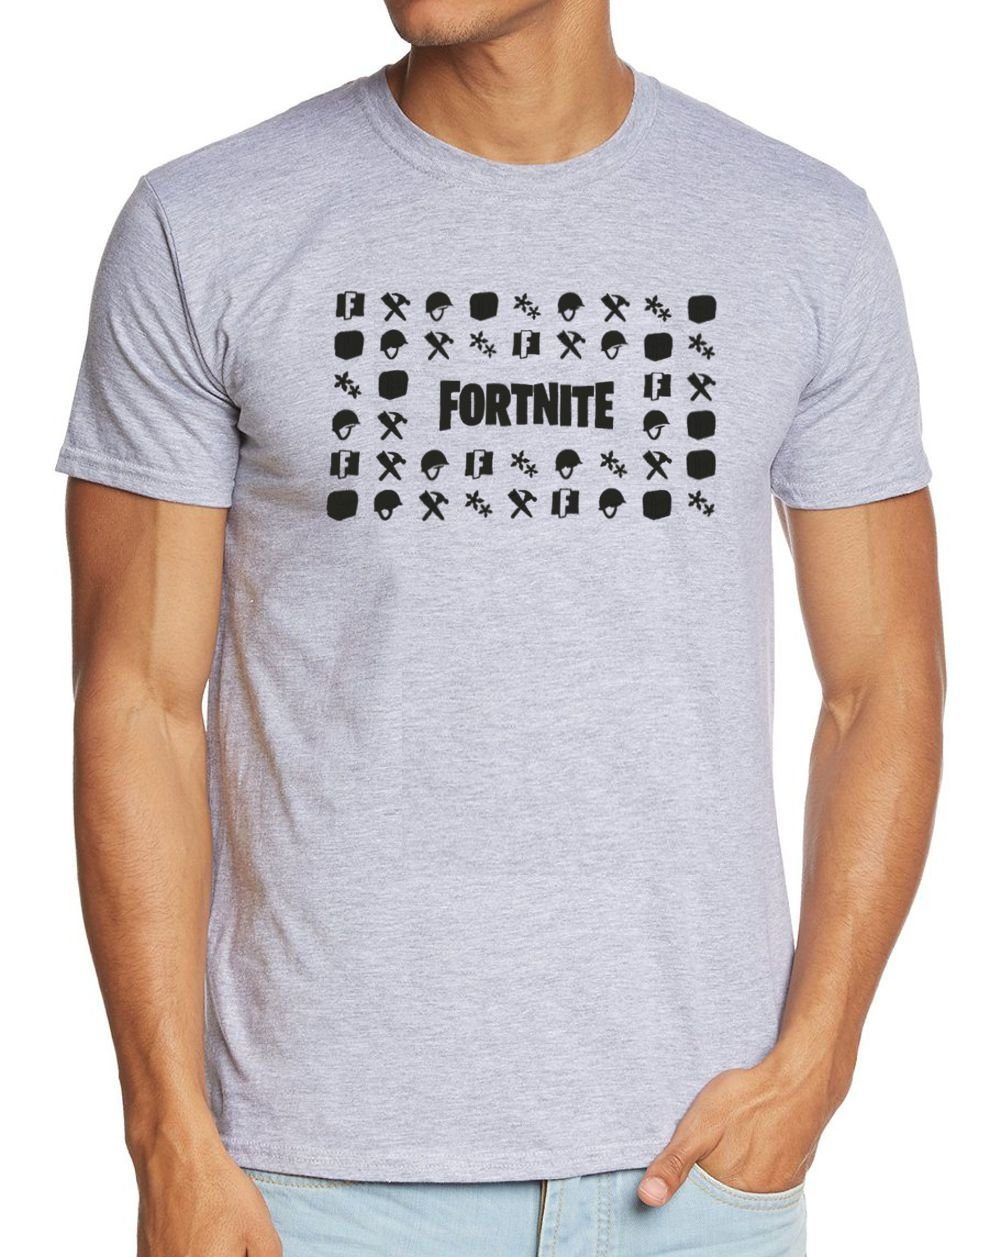 Fortnite Print-Shirt Fortnite T-Shirt hellgrau meliert Erwachsene + Jugendliche Epic Icons Gr. XS S M - Розмір 140 152 164 176 182